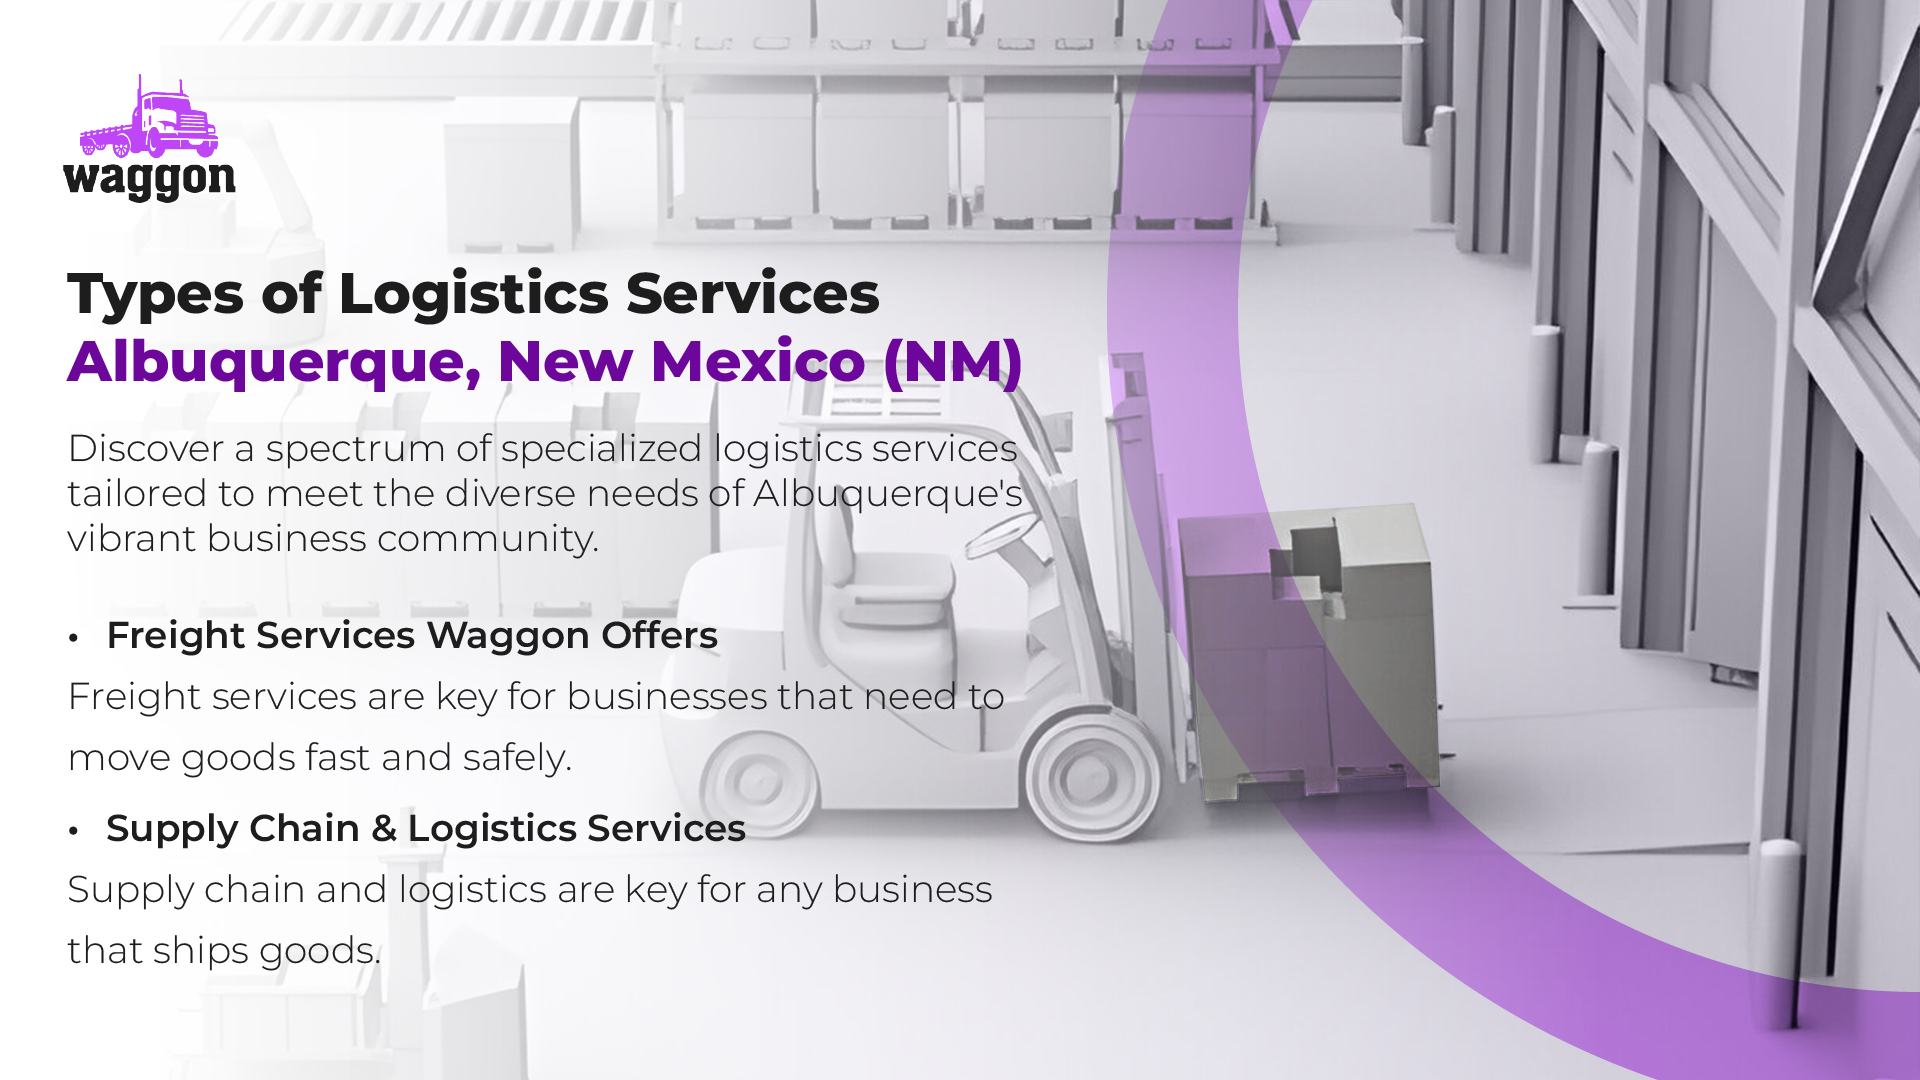 Types of Logistics Services in Albuquerque, New Mexico (NM)